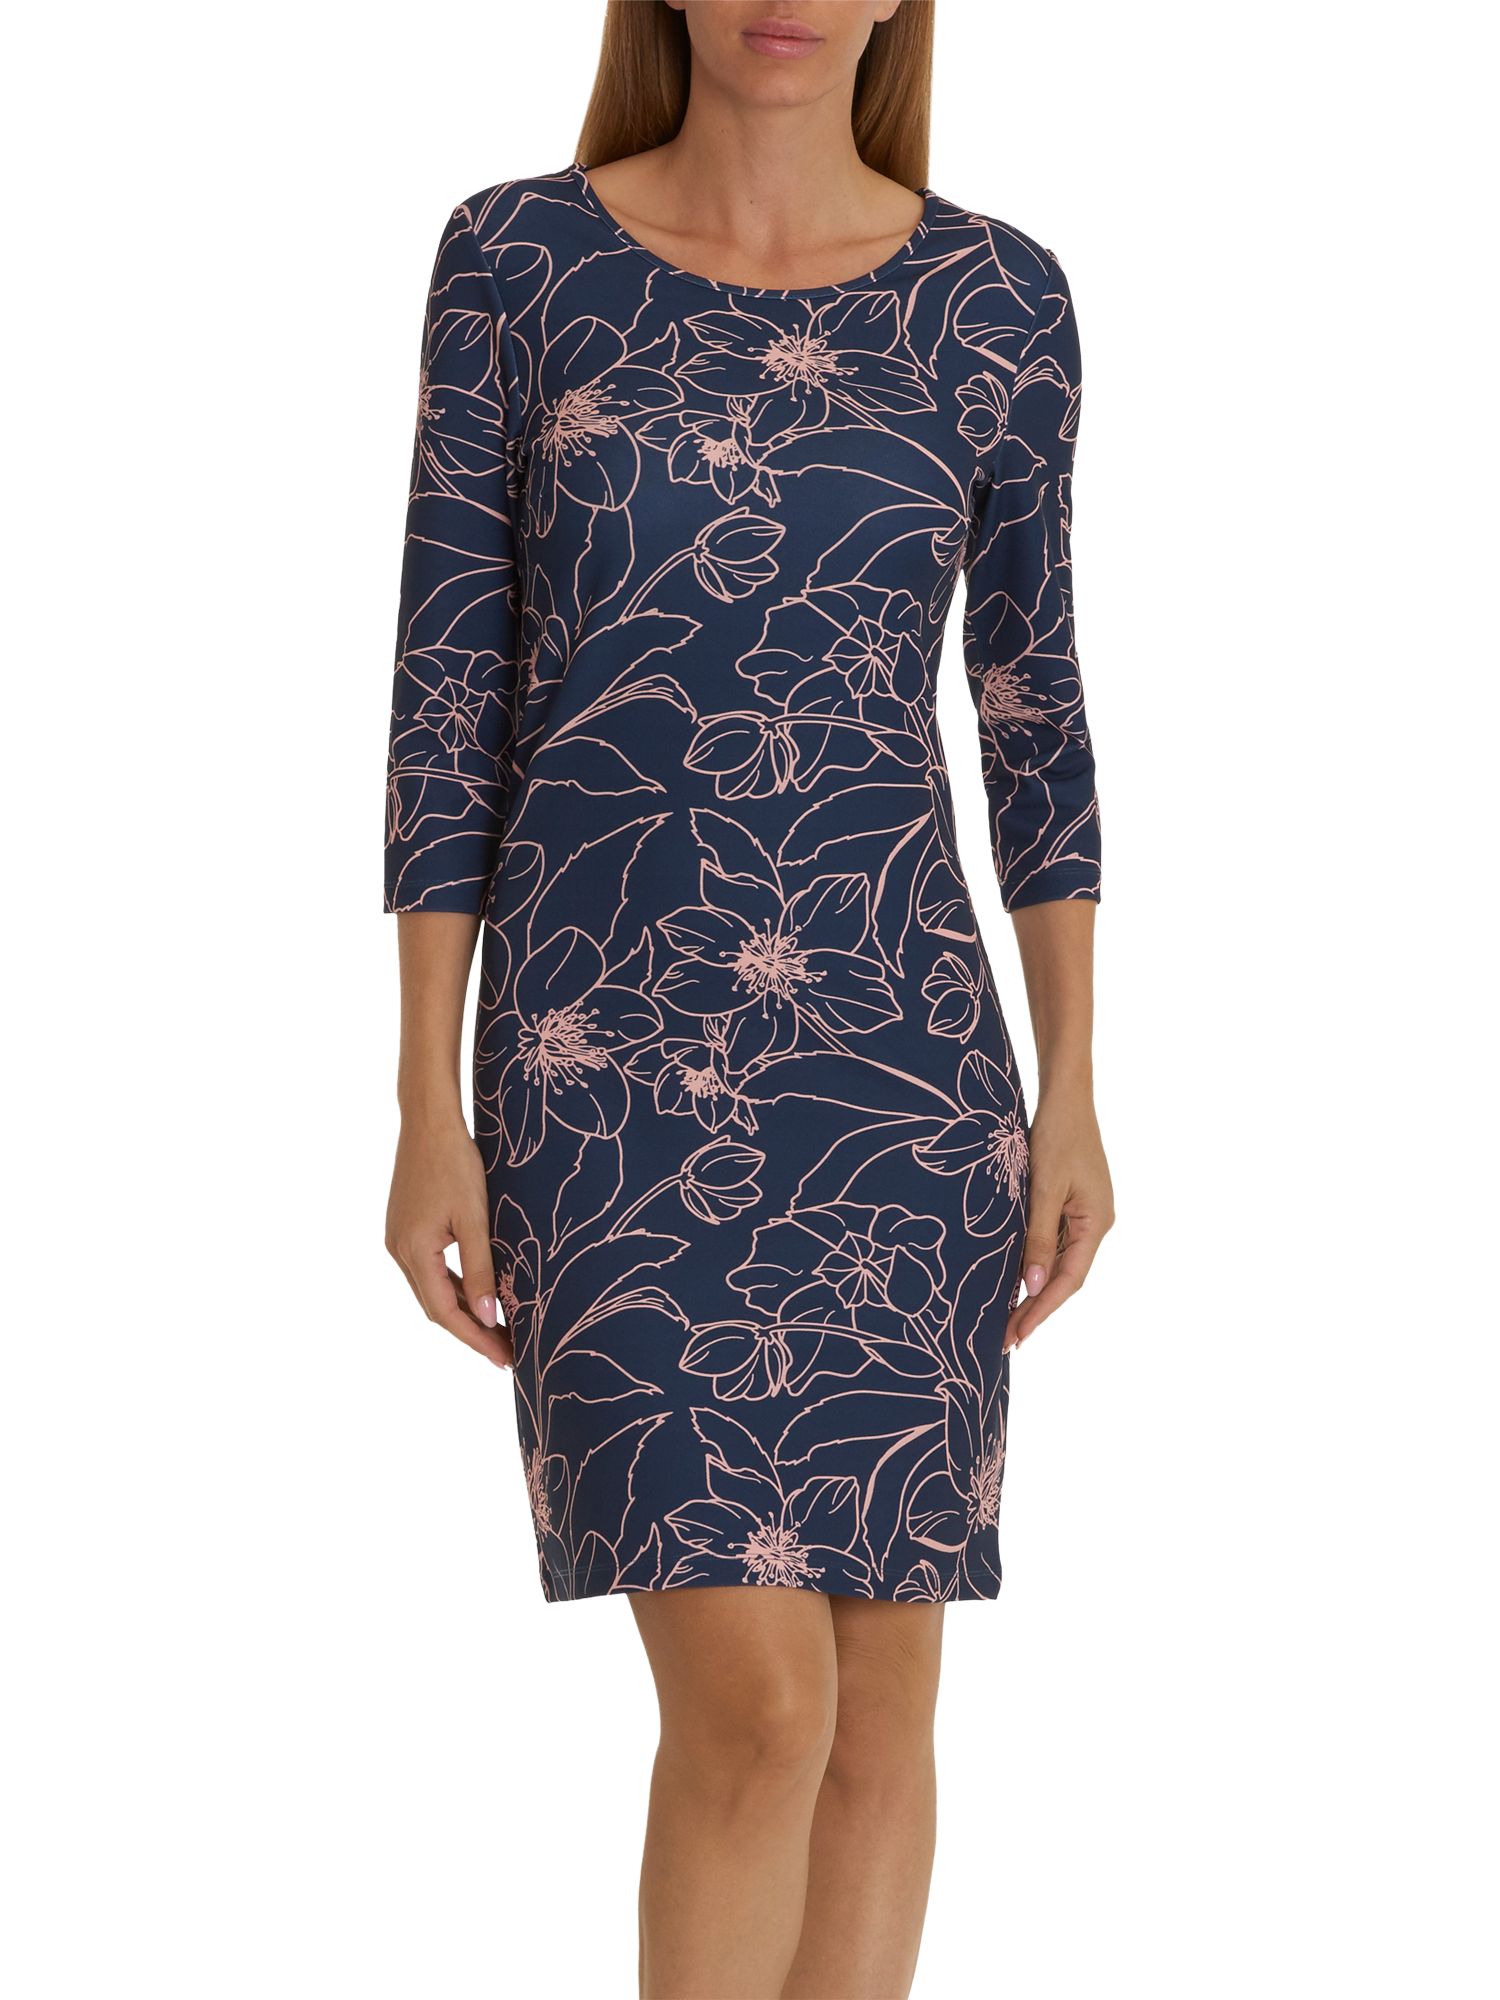 Betty Barclay Floral Print Jersey Dress, Dark Blue/Rose